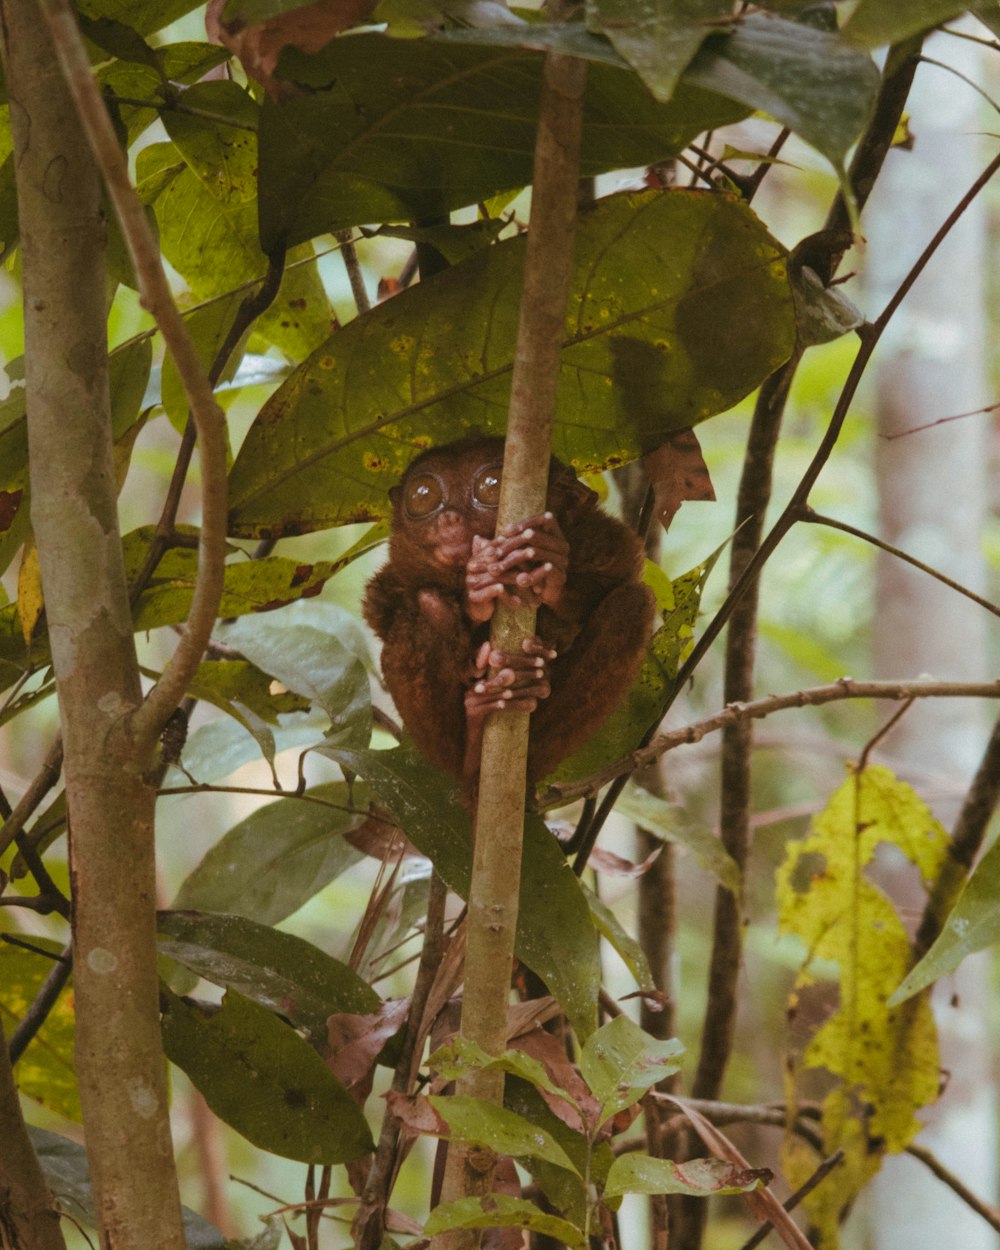 brown monkey on green leaf during daytime